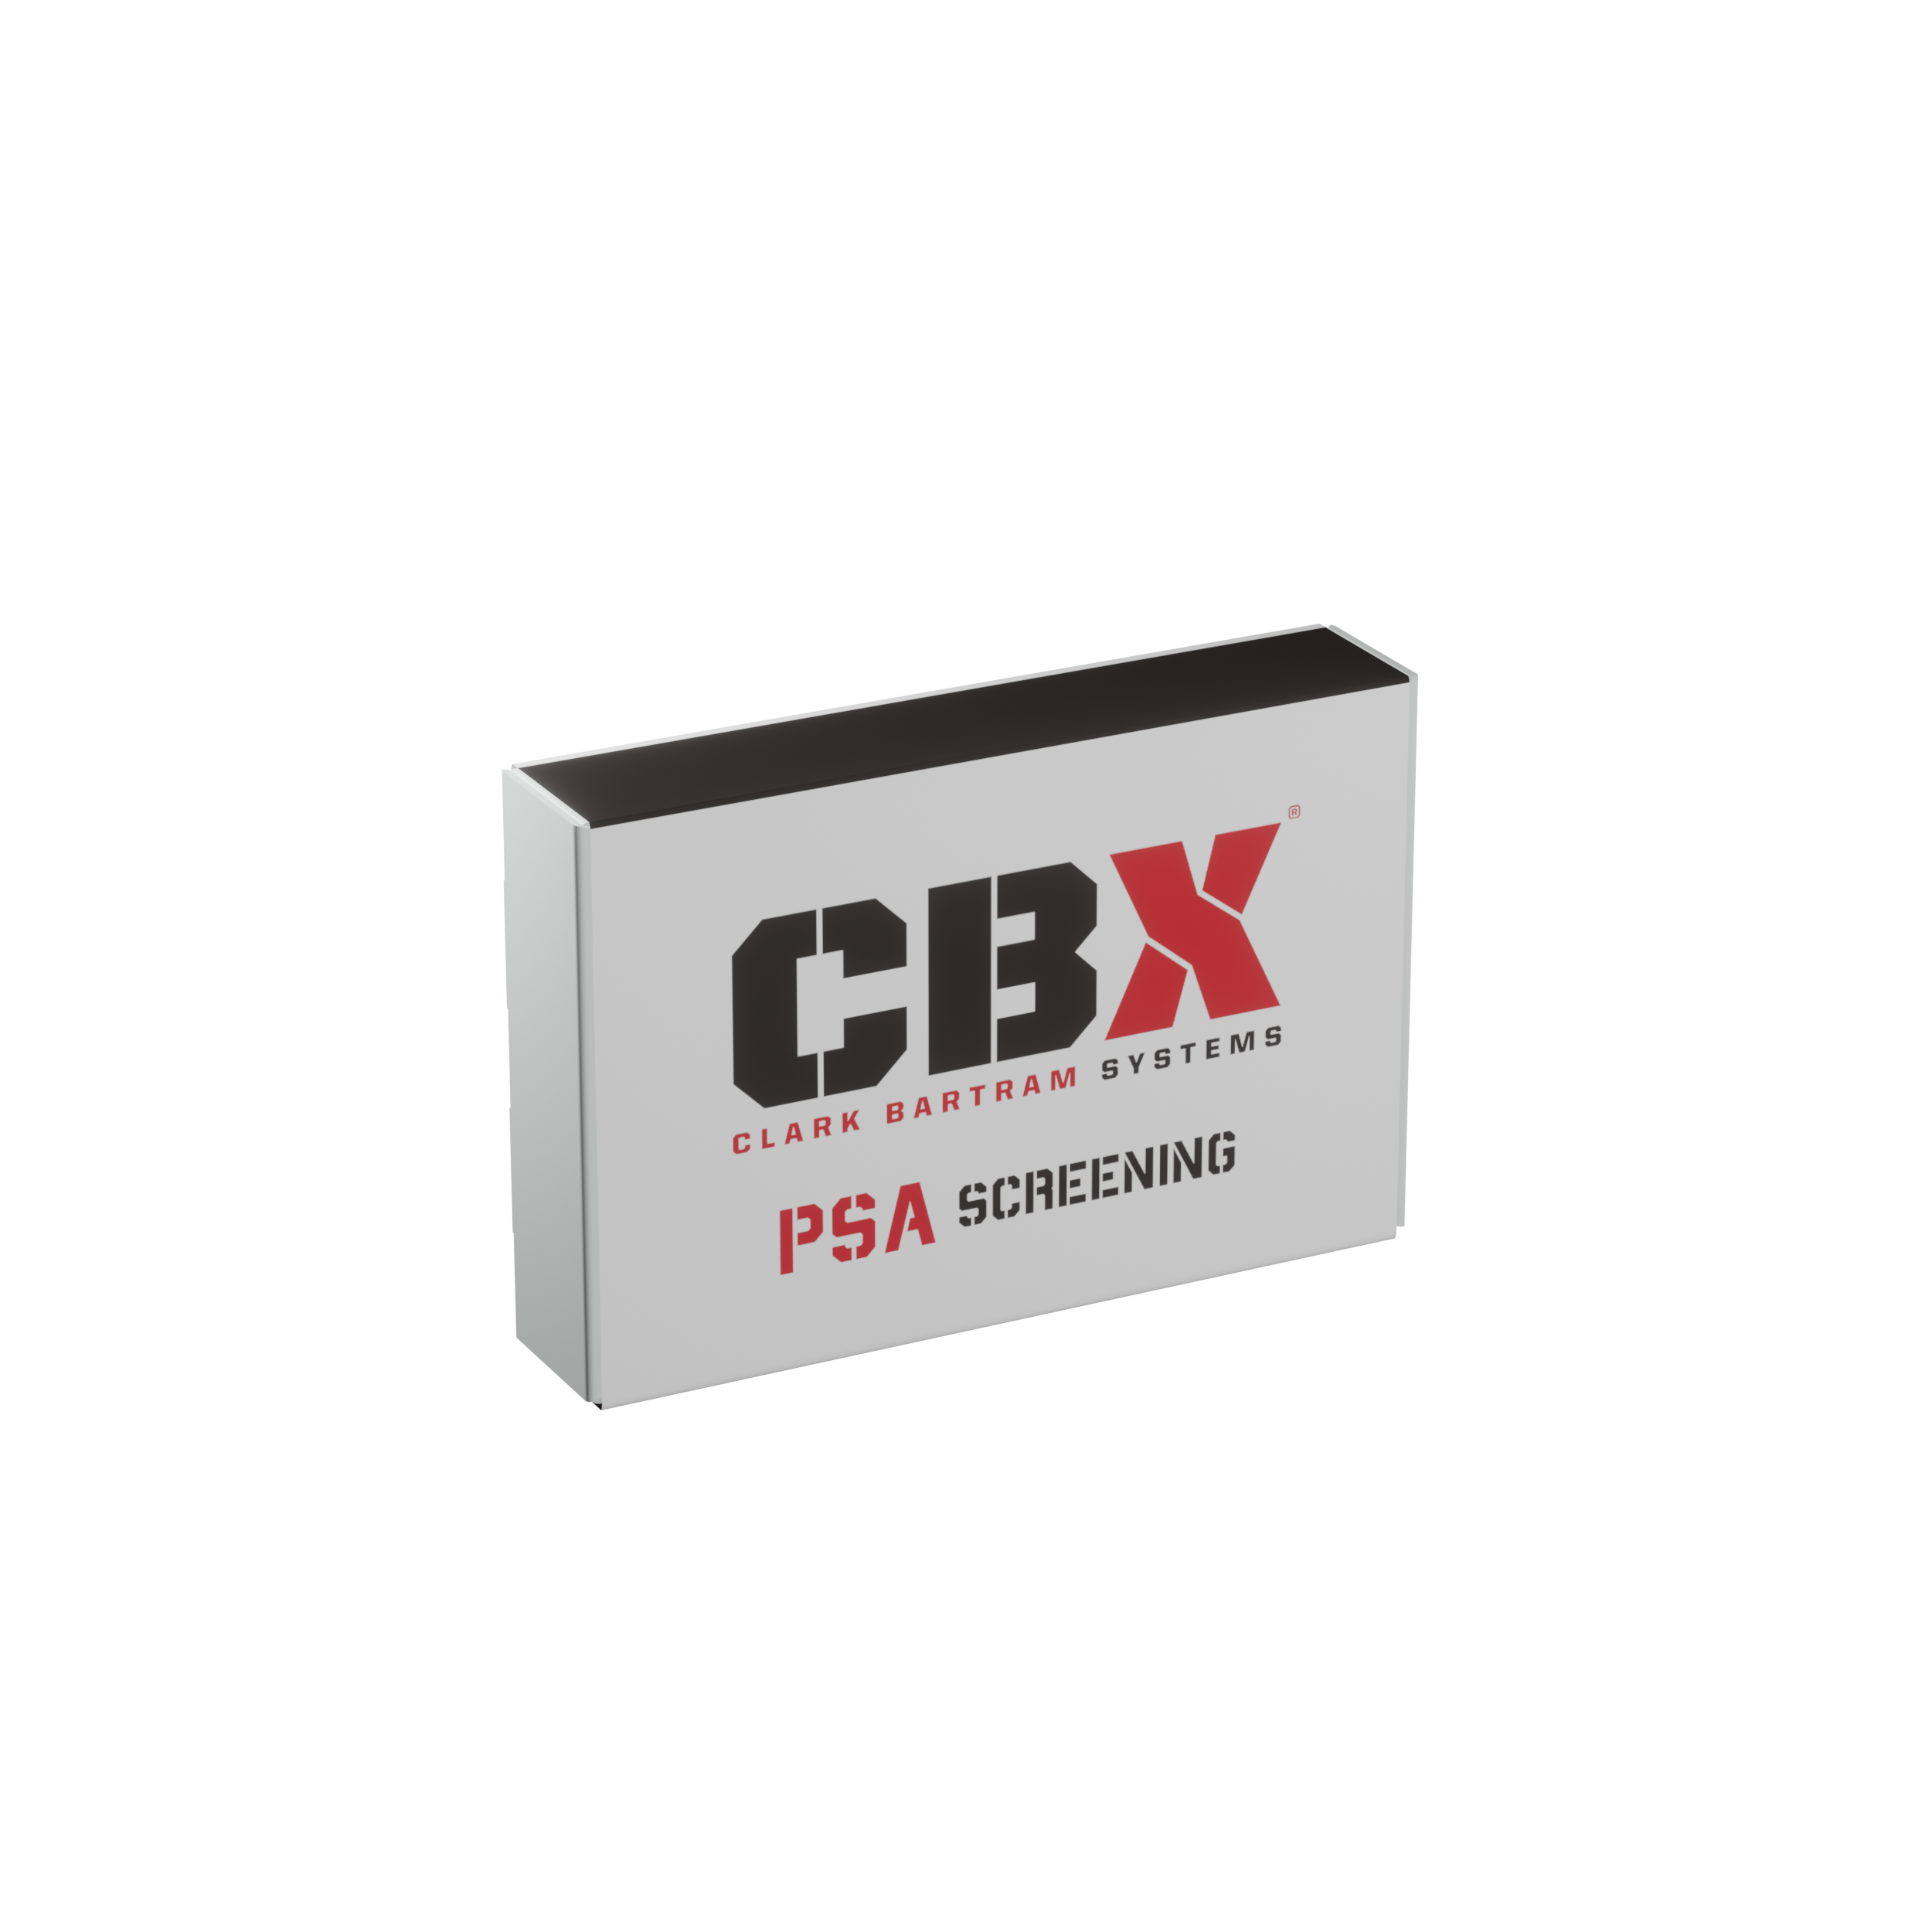 CBX Men's PSA Screening Kit